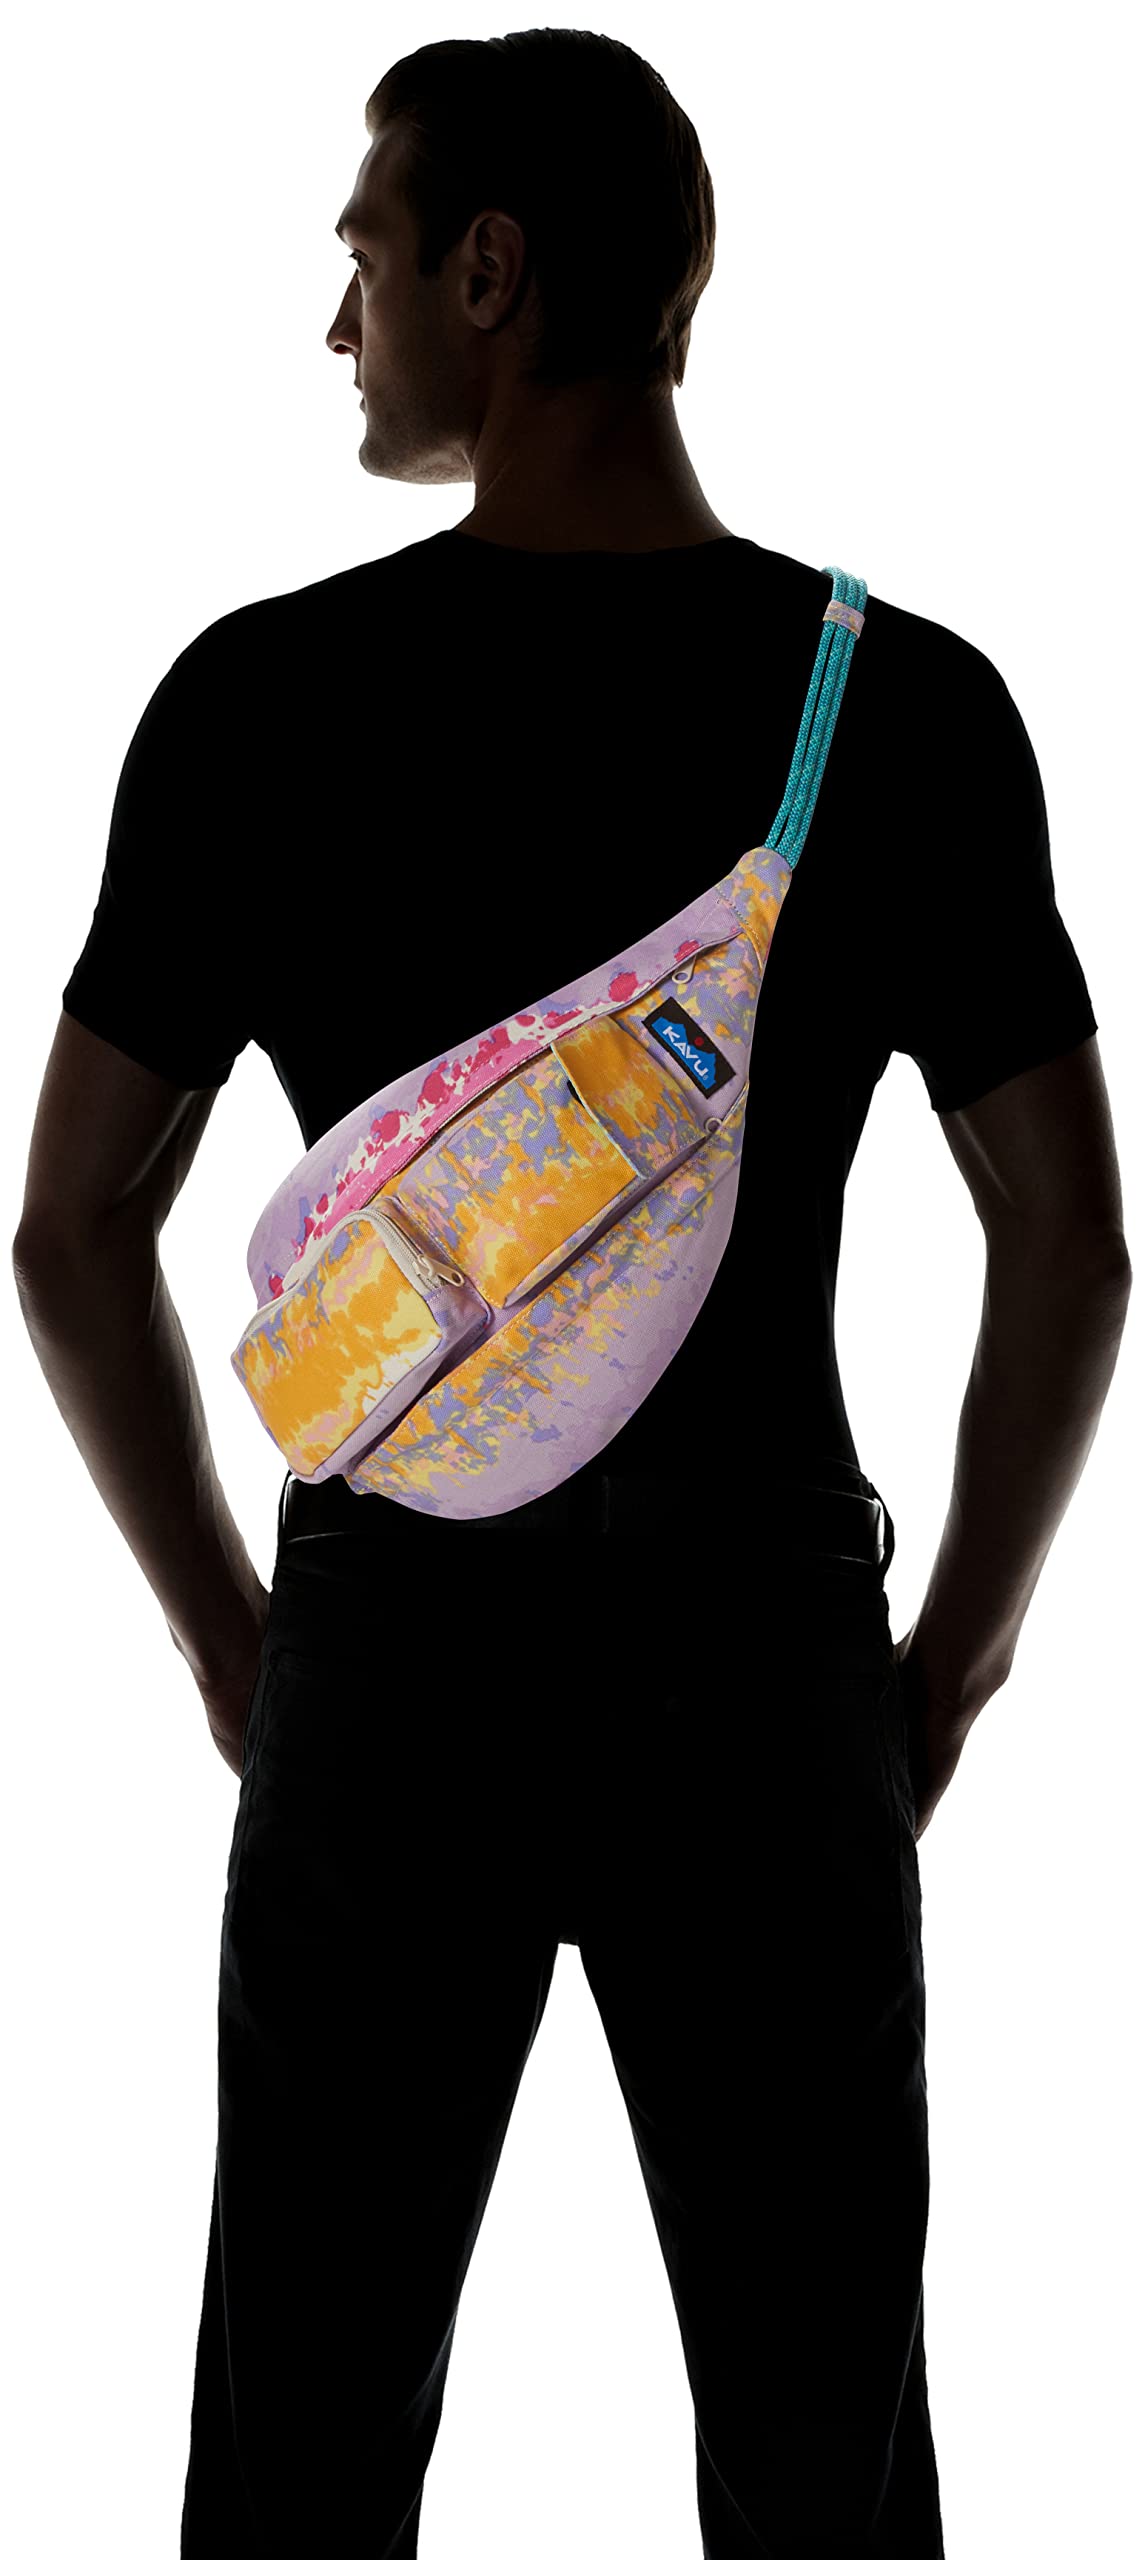 KAVU Basic-Multipurpose-Backpacks, Beach Tie Dye, One Size